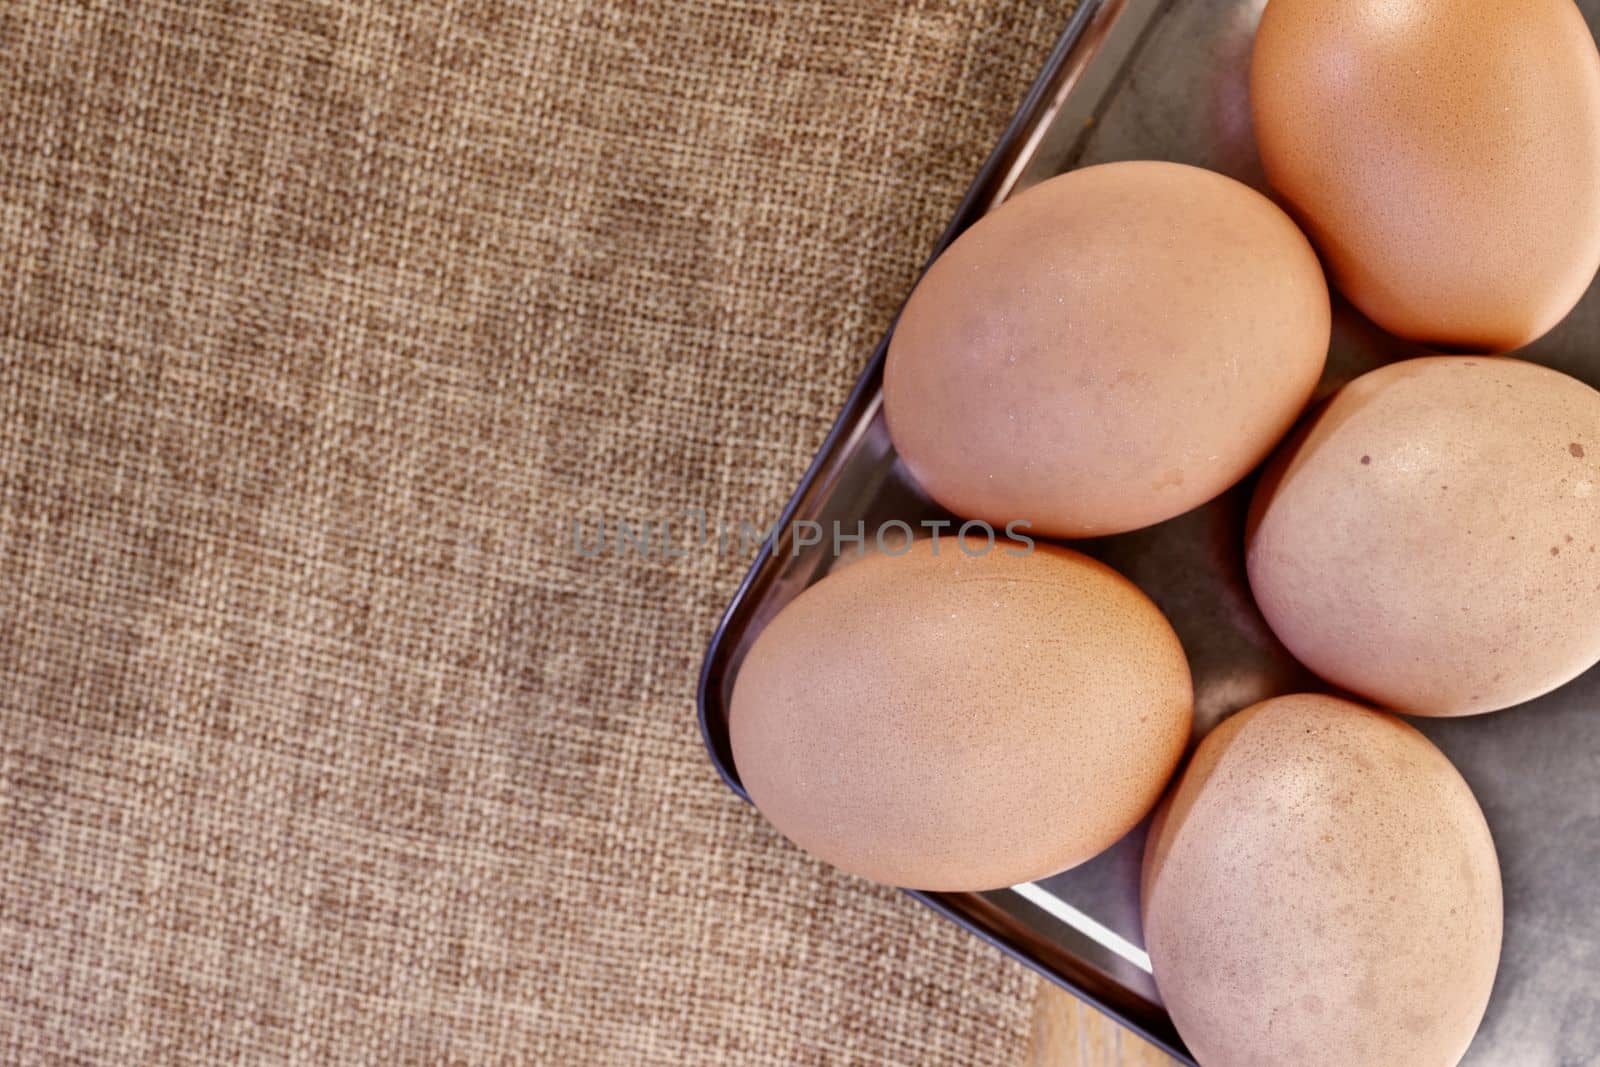 Raw eggs in tray by victimewalker